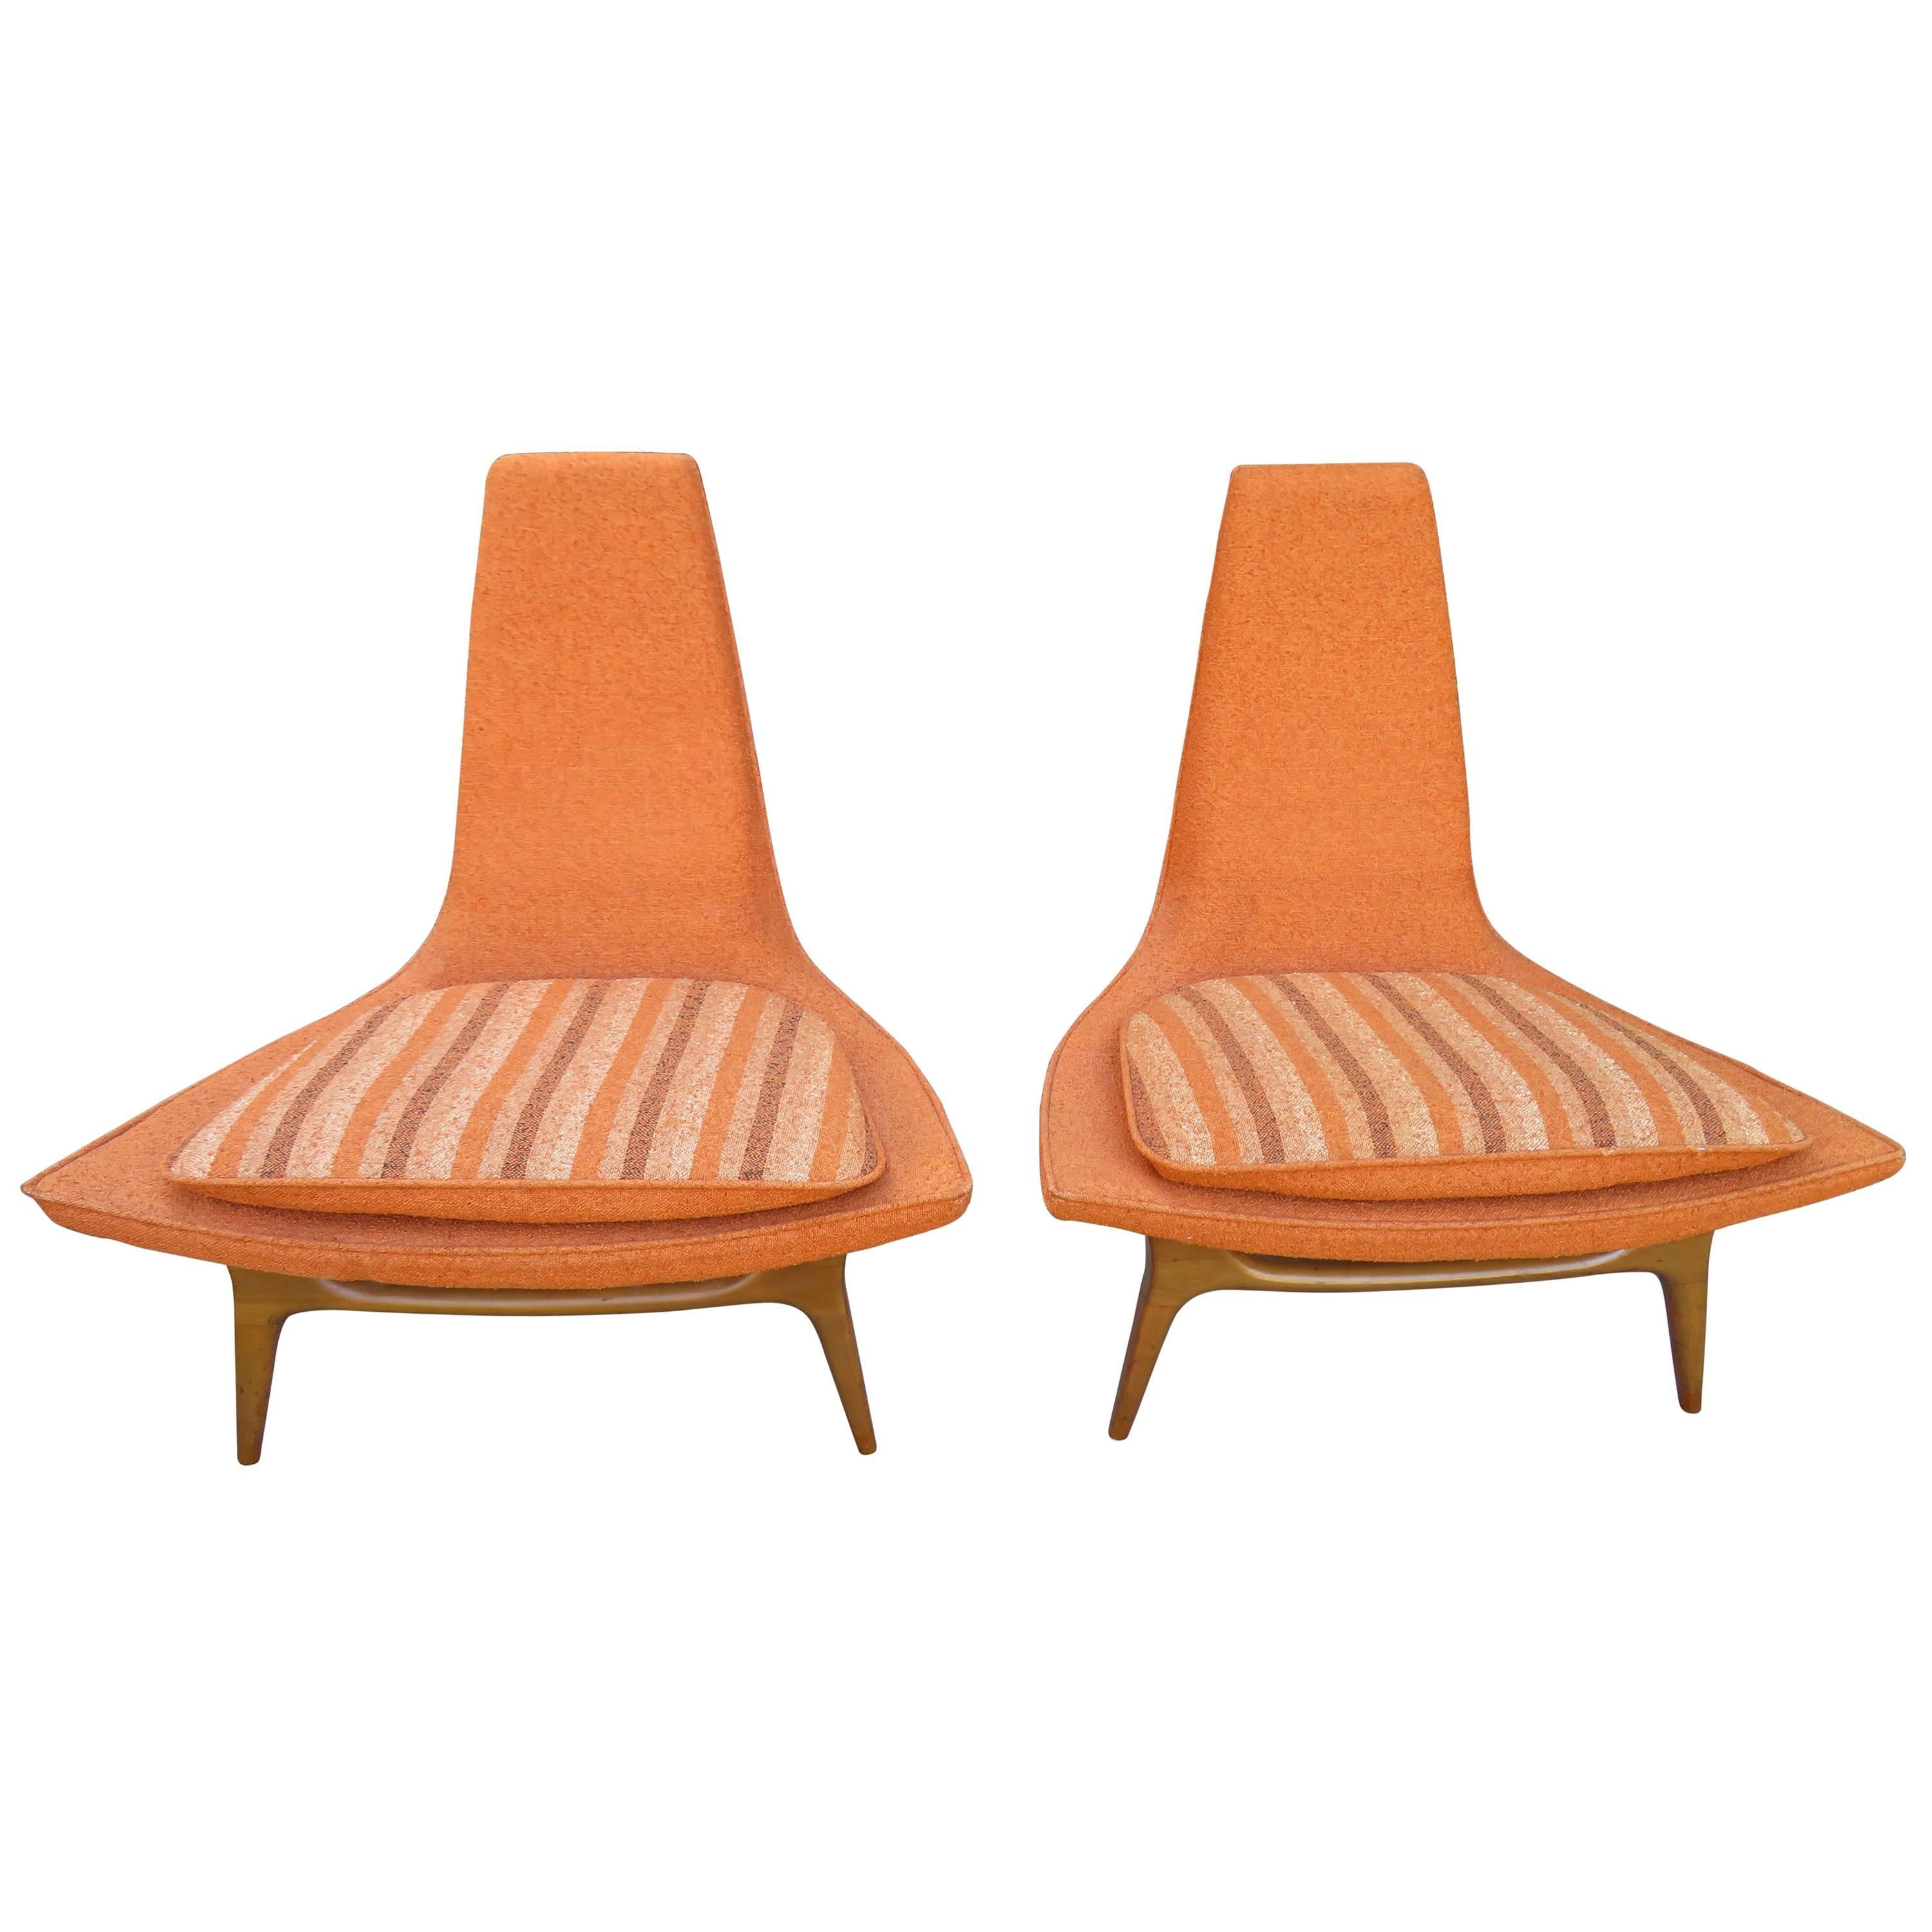 Fantastic Pair of Sculptural Walnut Lounge Chairs by Karpen, Mid-Century Modern